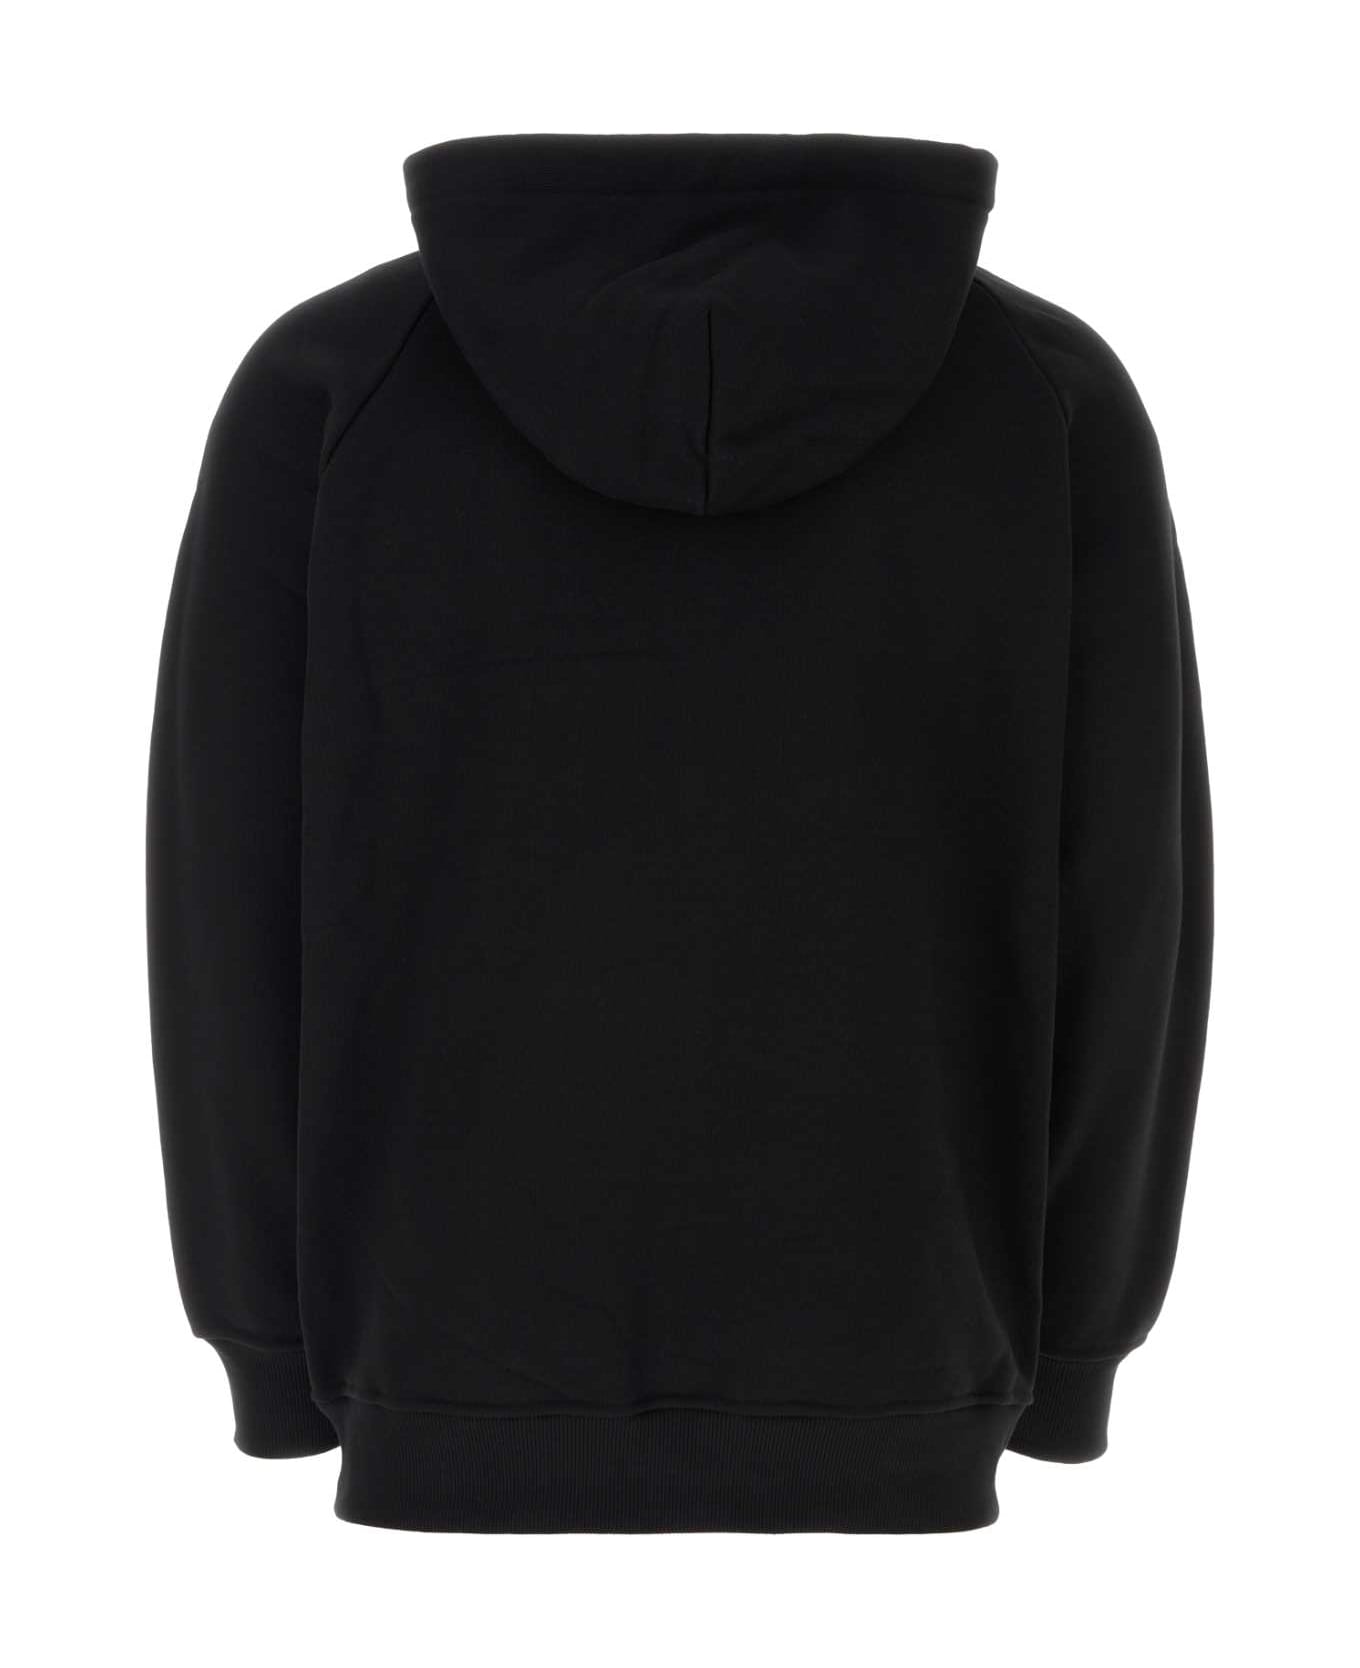 Emporio Armani Black Jersey Sweatshirt - 0999 フリース